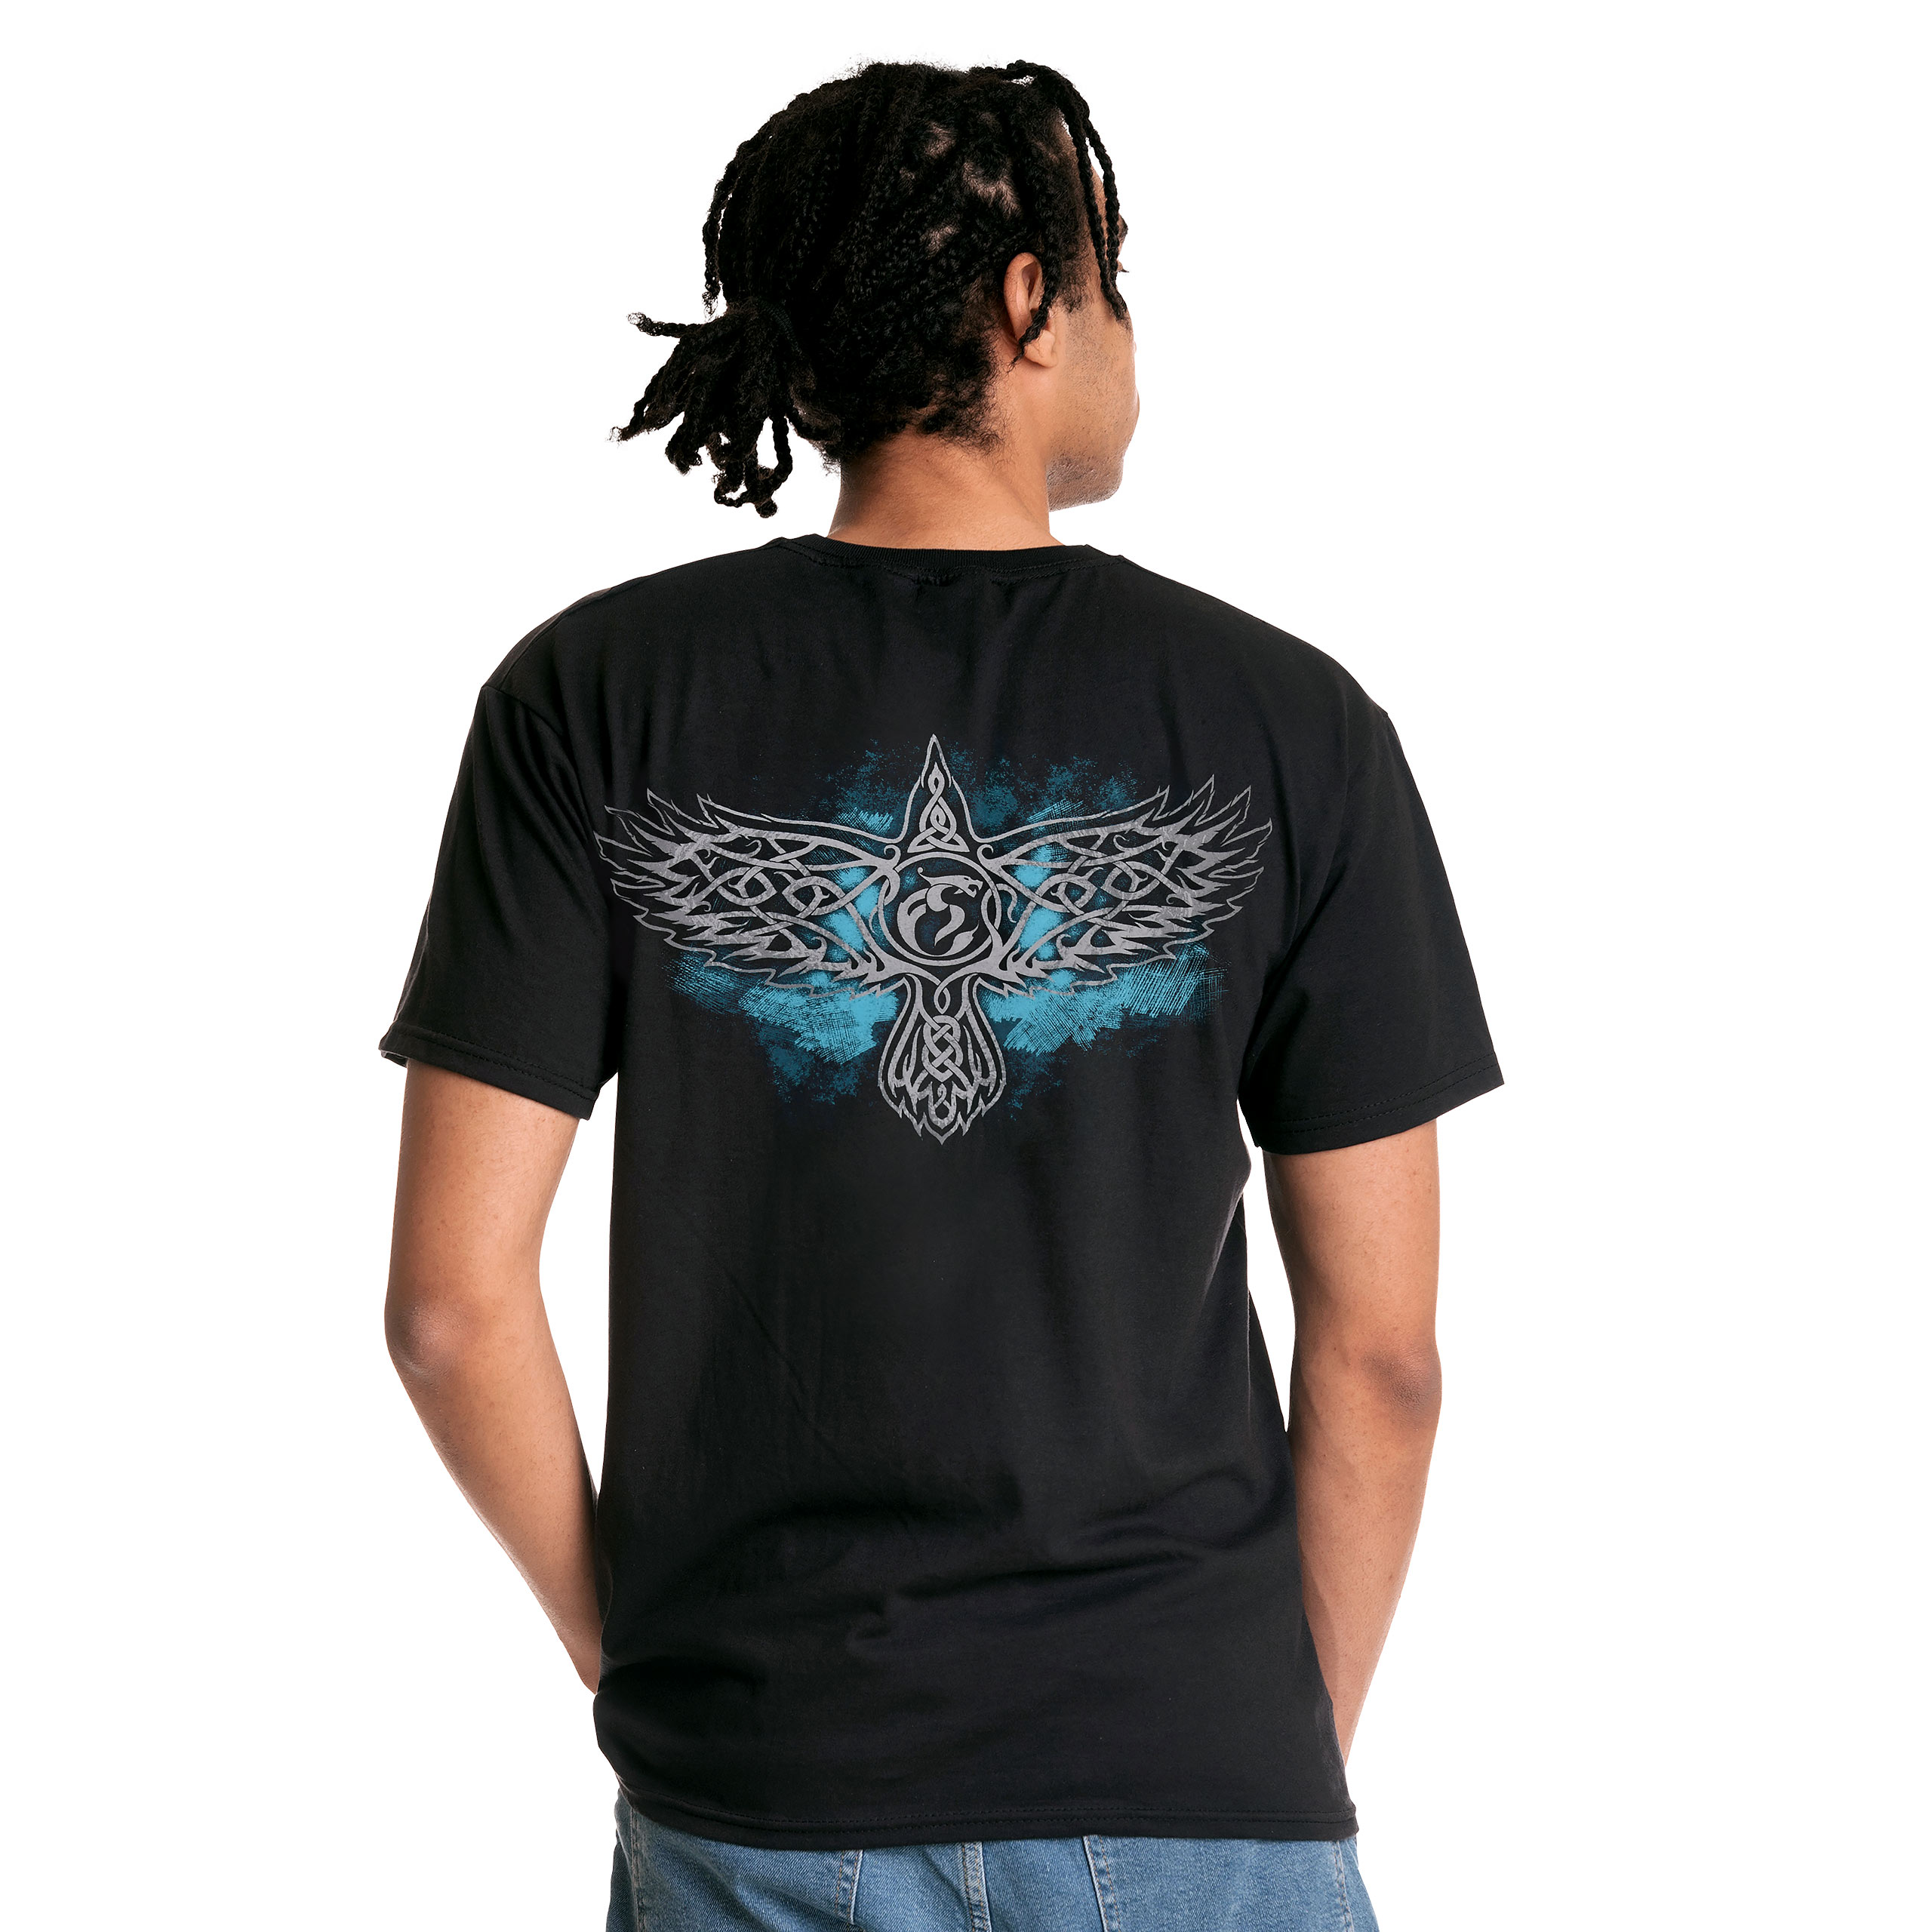 Feuerschwanz - Morrigan T-Shirt schwarz